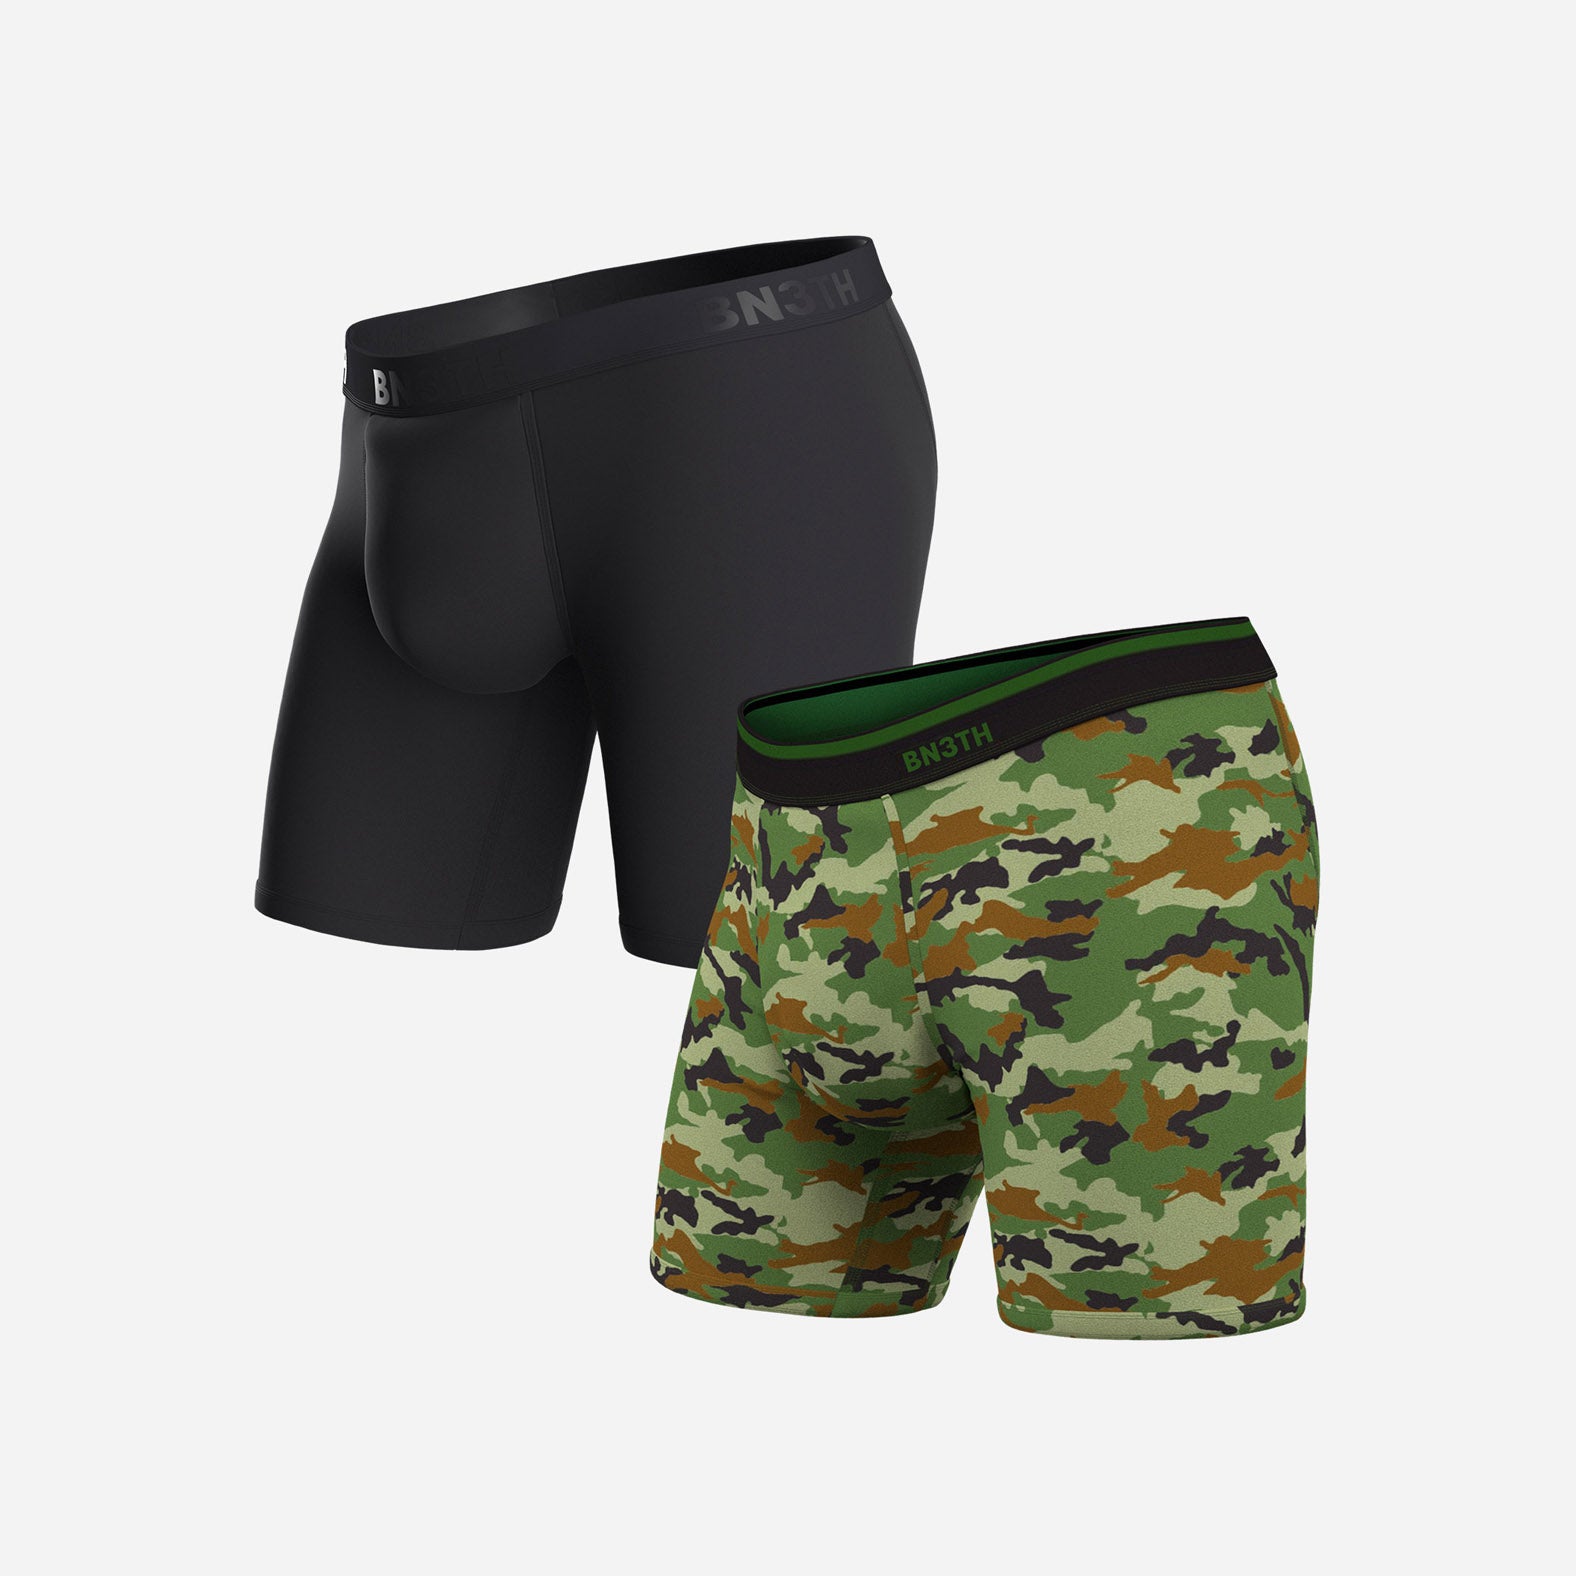 Under Armour Men's Boxer Briefs 3 Pack 6 Boxerjock Athletic Training  Underwear, Black, XL 